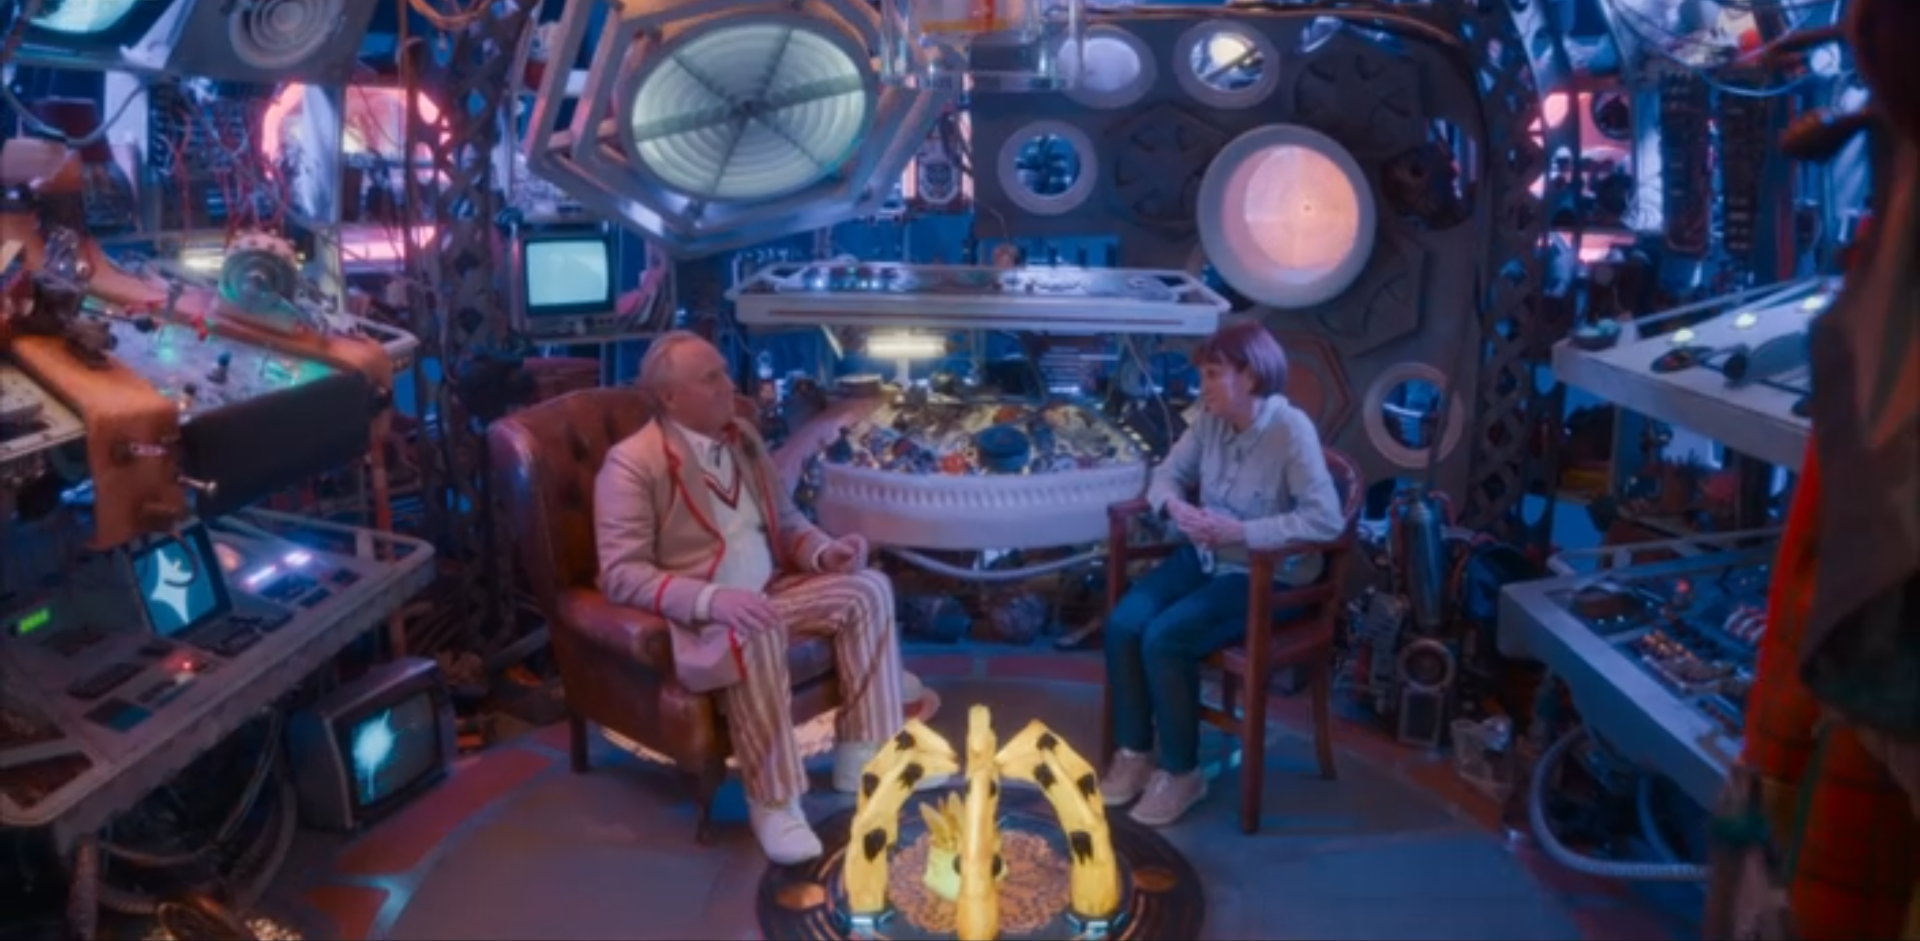 The Fifth Doctor and Tegan reminiscing inside the Memory TARDIS. (TV: Earthshock [+]Loading...["Earthshock (TotT TV story)"])